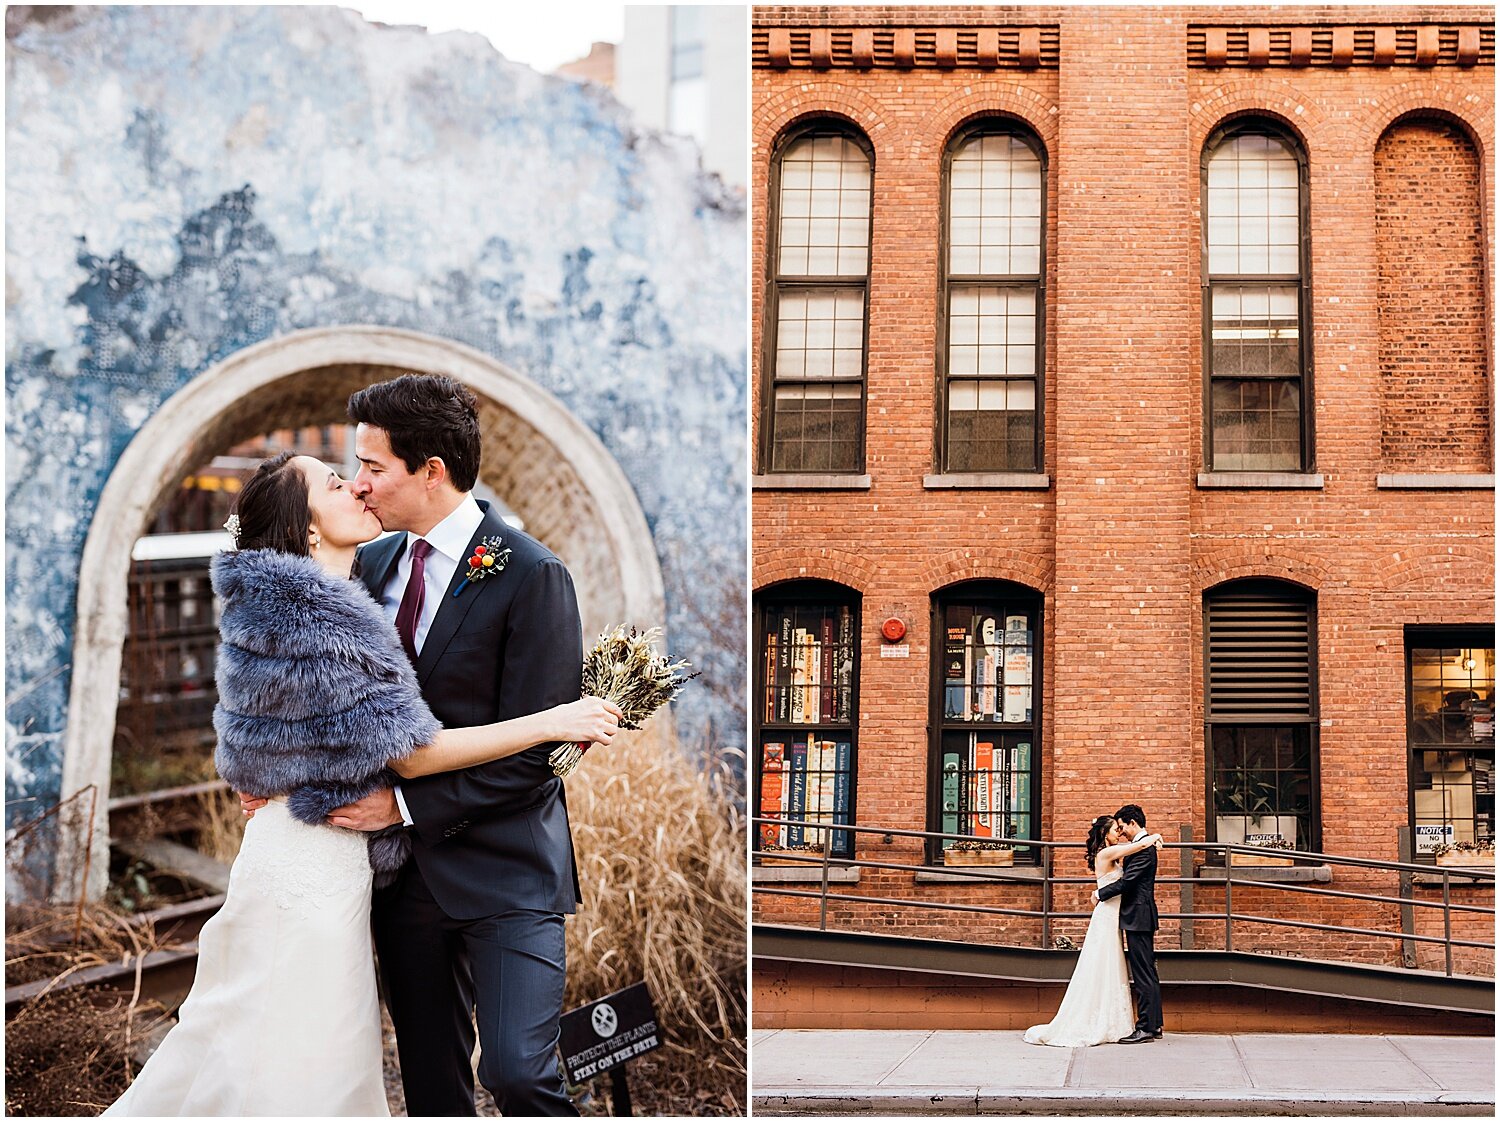 Havens-Kitchen-Wedding-Venue-NYC-Apollo-Fields-Weddings-Photographers-New-York-City-027.jpg